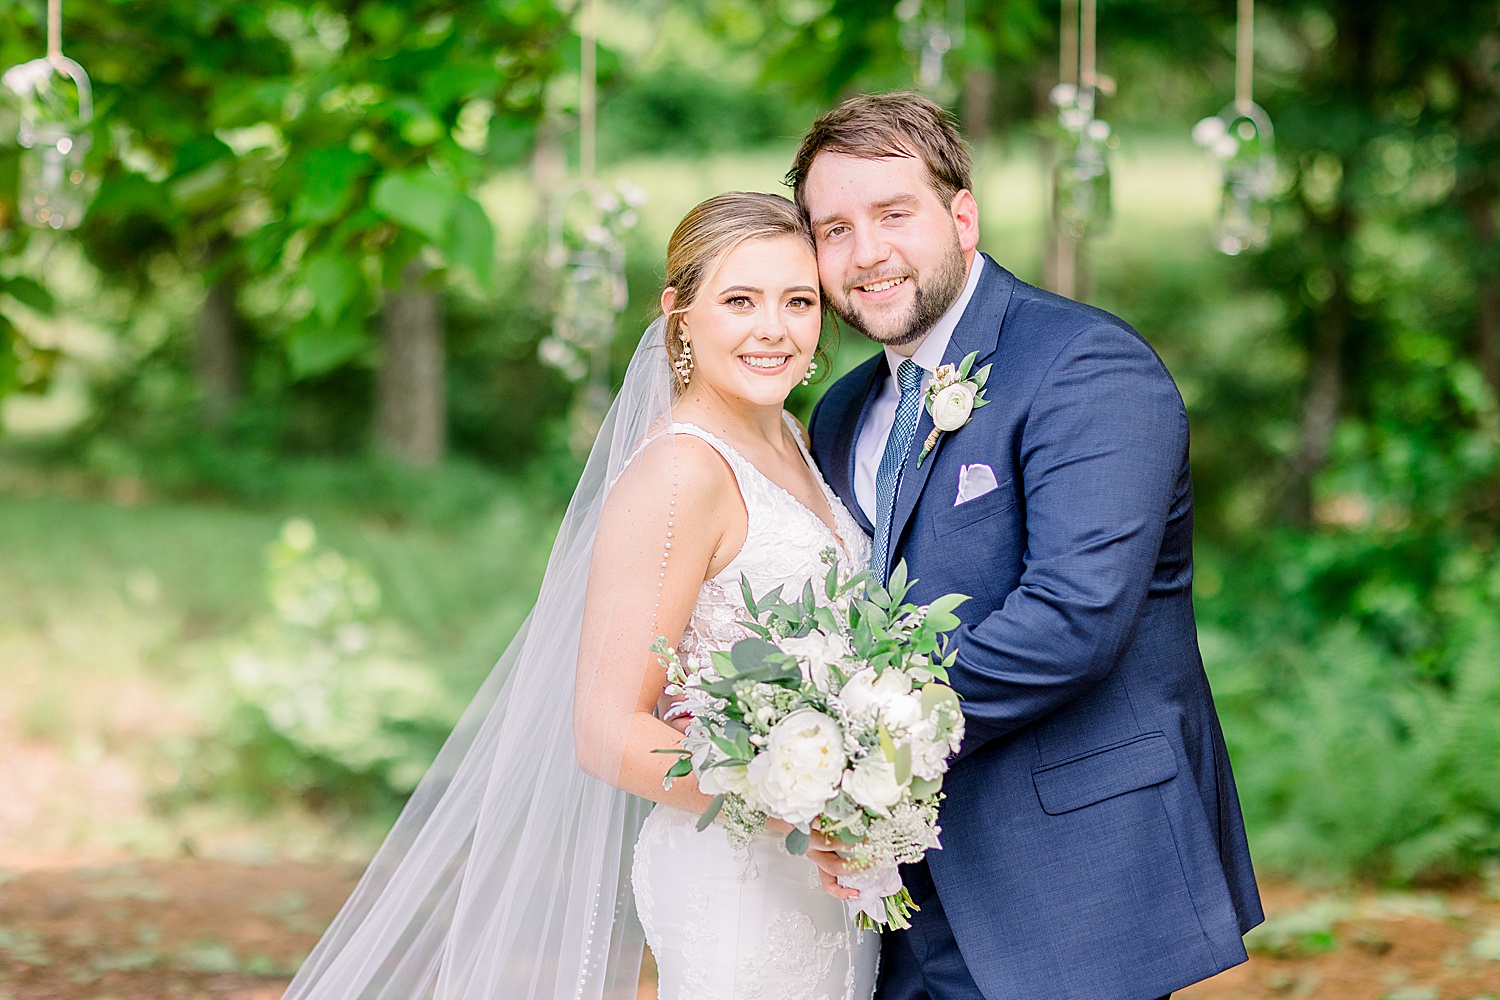 Belle Farm Alabama wedding Groom + Bride with Bouquet by Chelsea Morton Photography